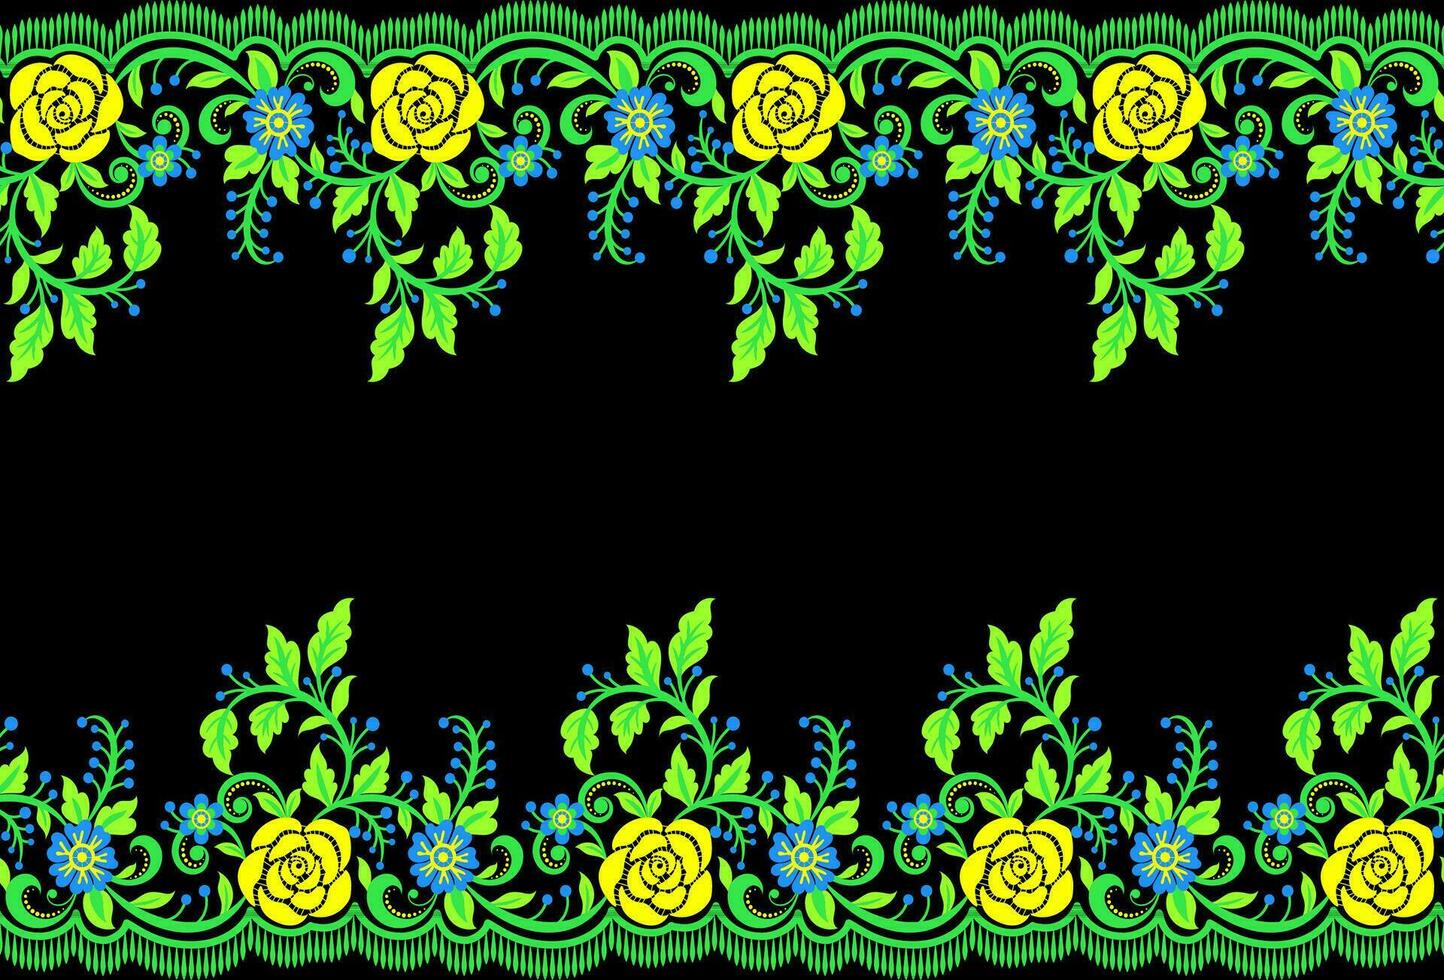 botánico floral sin costura. antecedentes sin costura modelo geométrico étnico modelo diseño para fondo, alfombra, fondo de pantalla, ropa, envase, batik, tela, impresión textil ilustración. vector